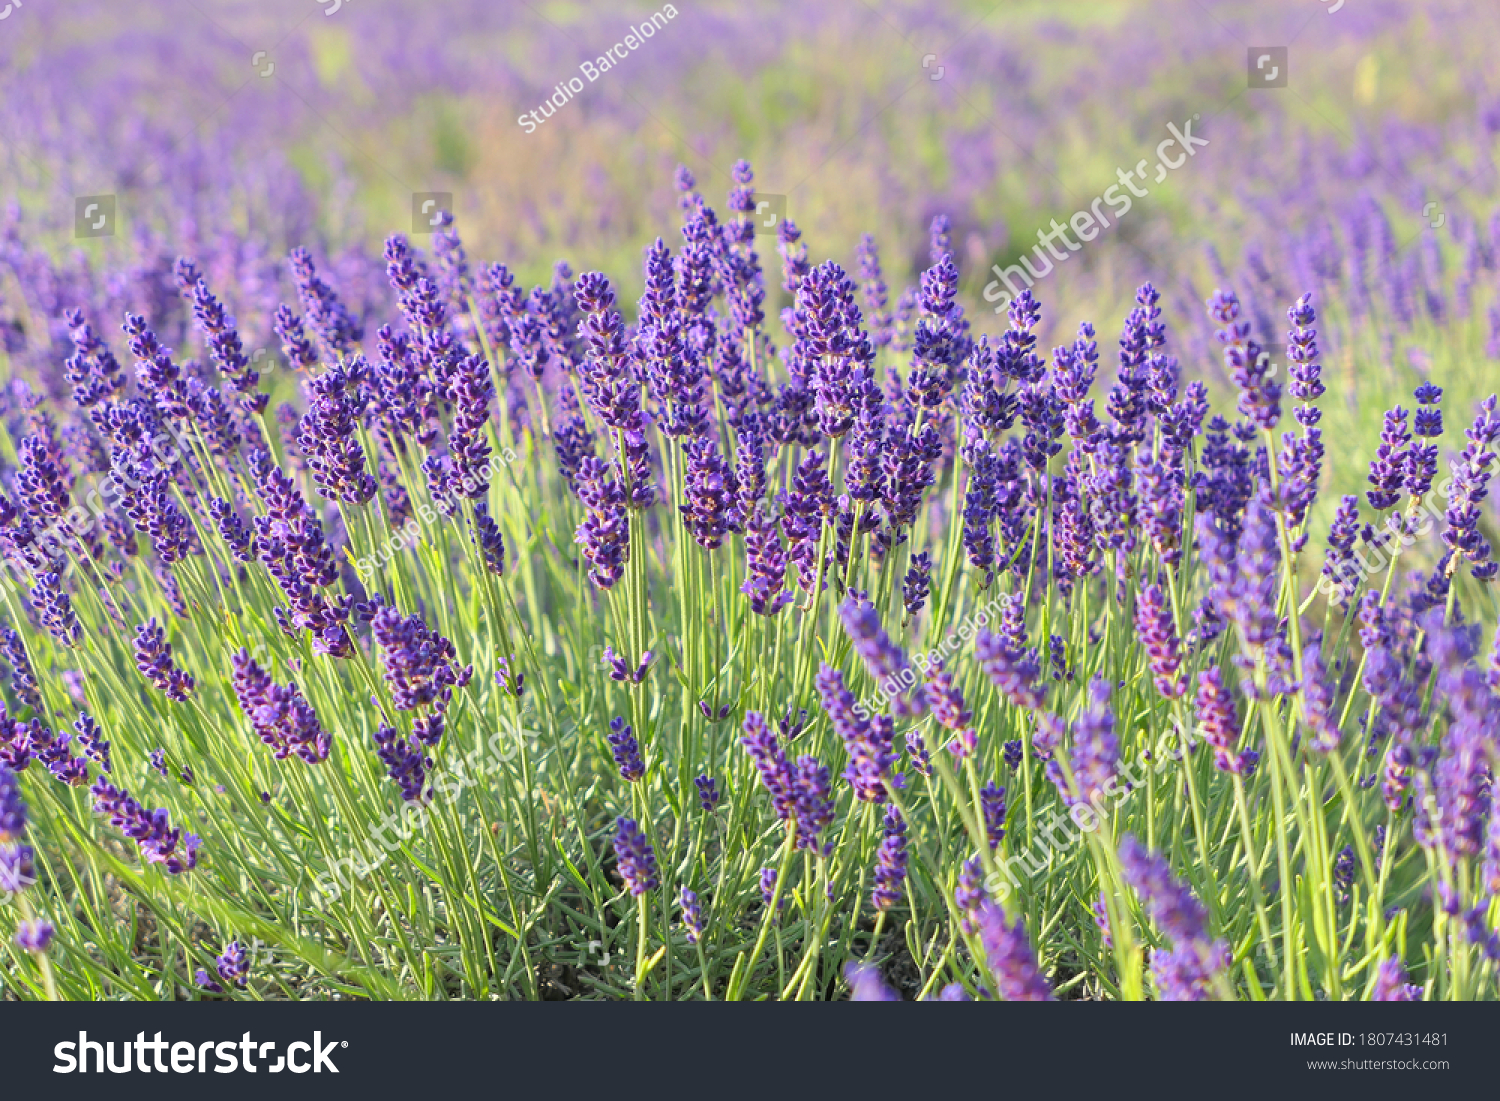 Lavender flowers field in summer. Selective focus. #1807431481